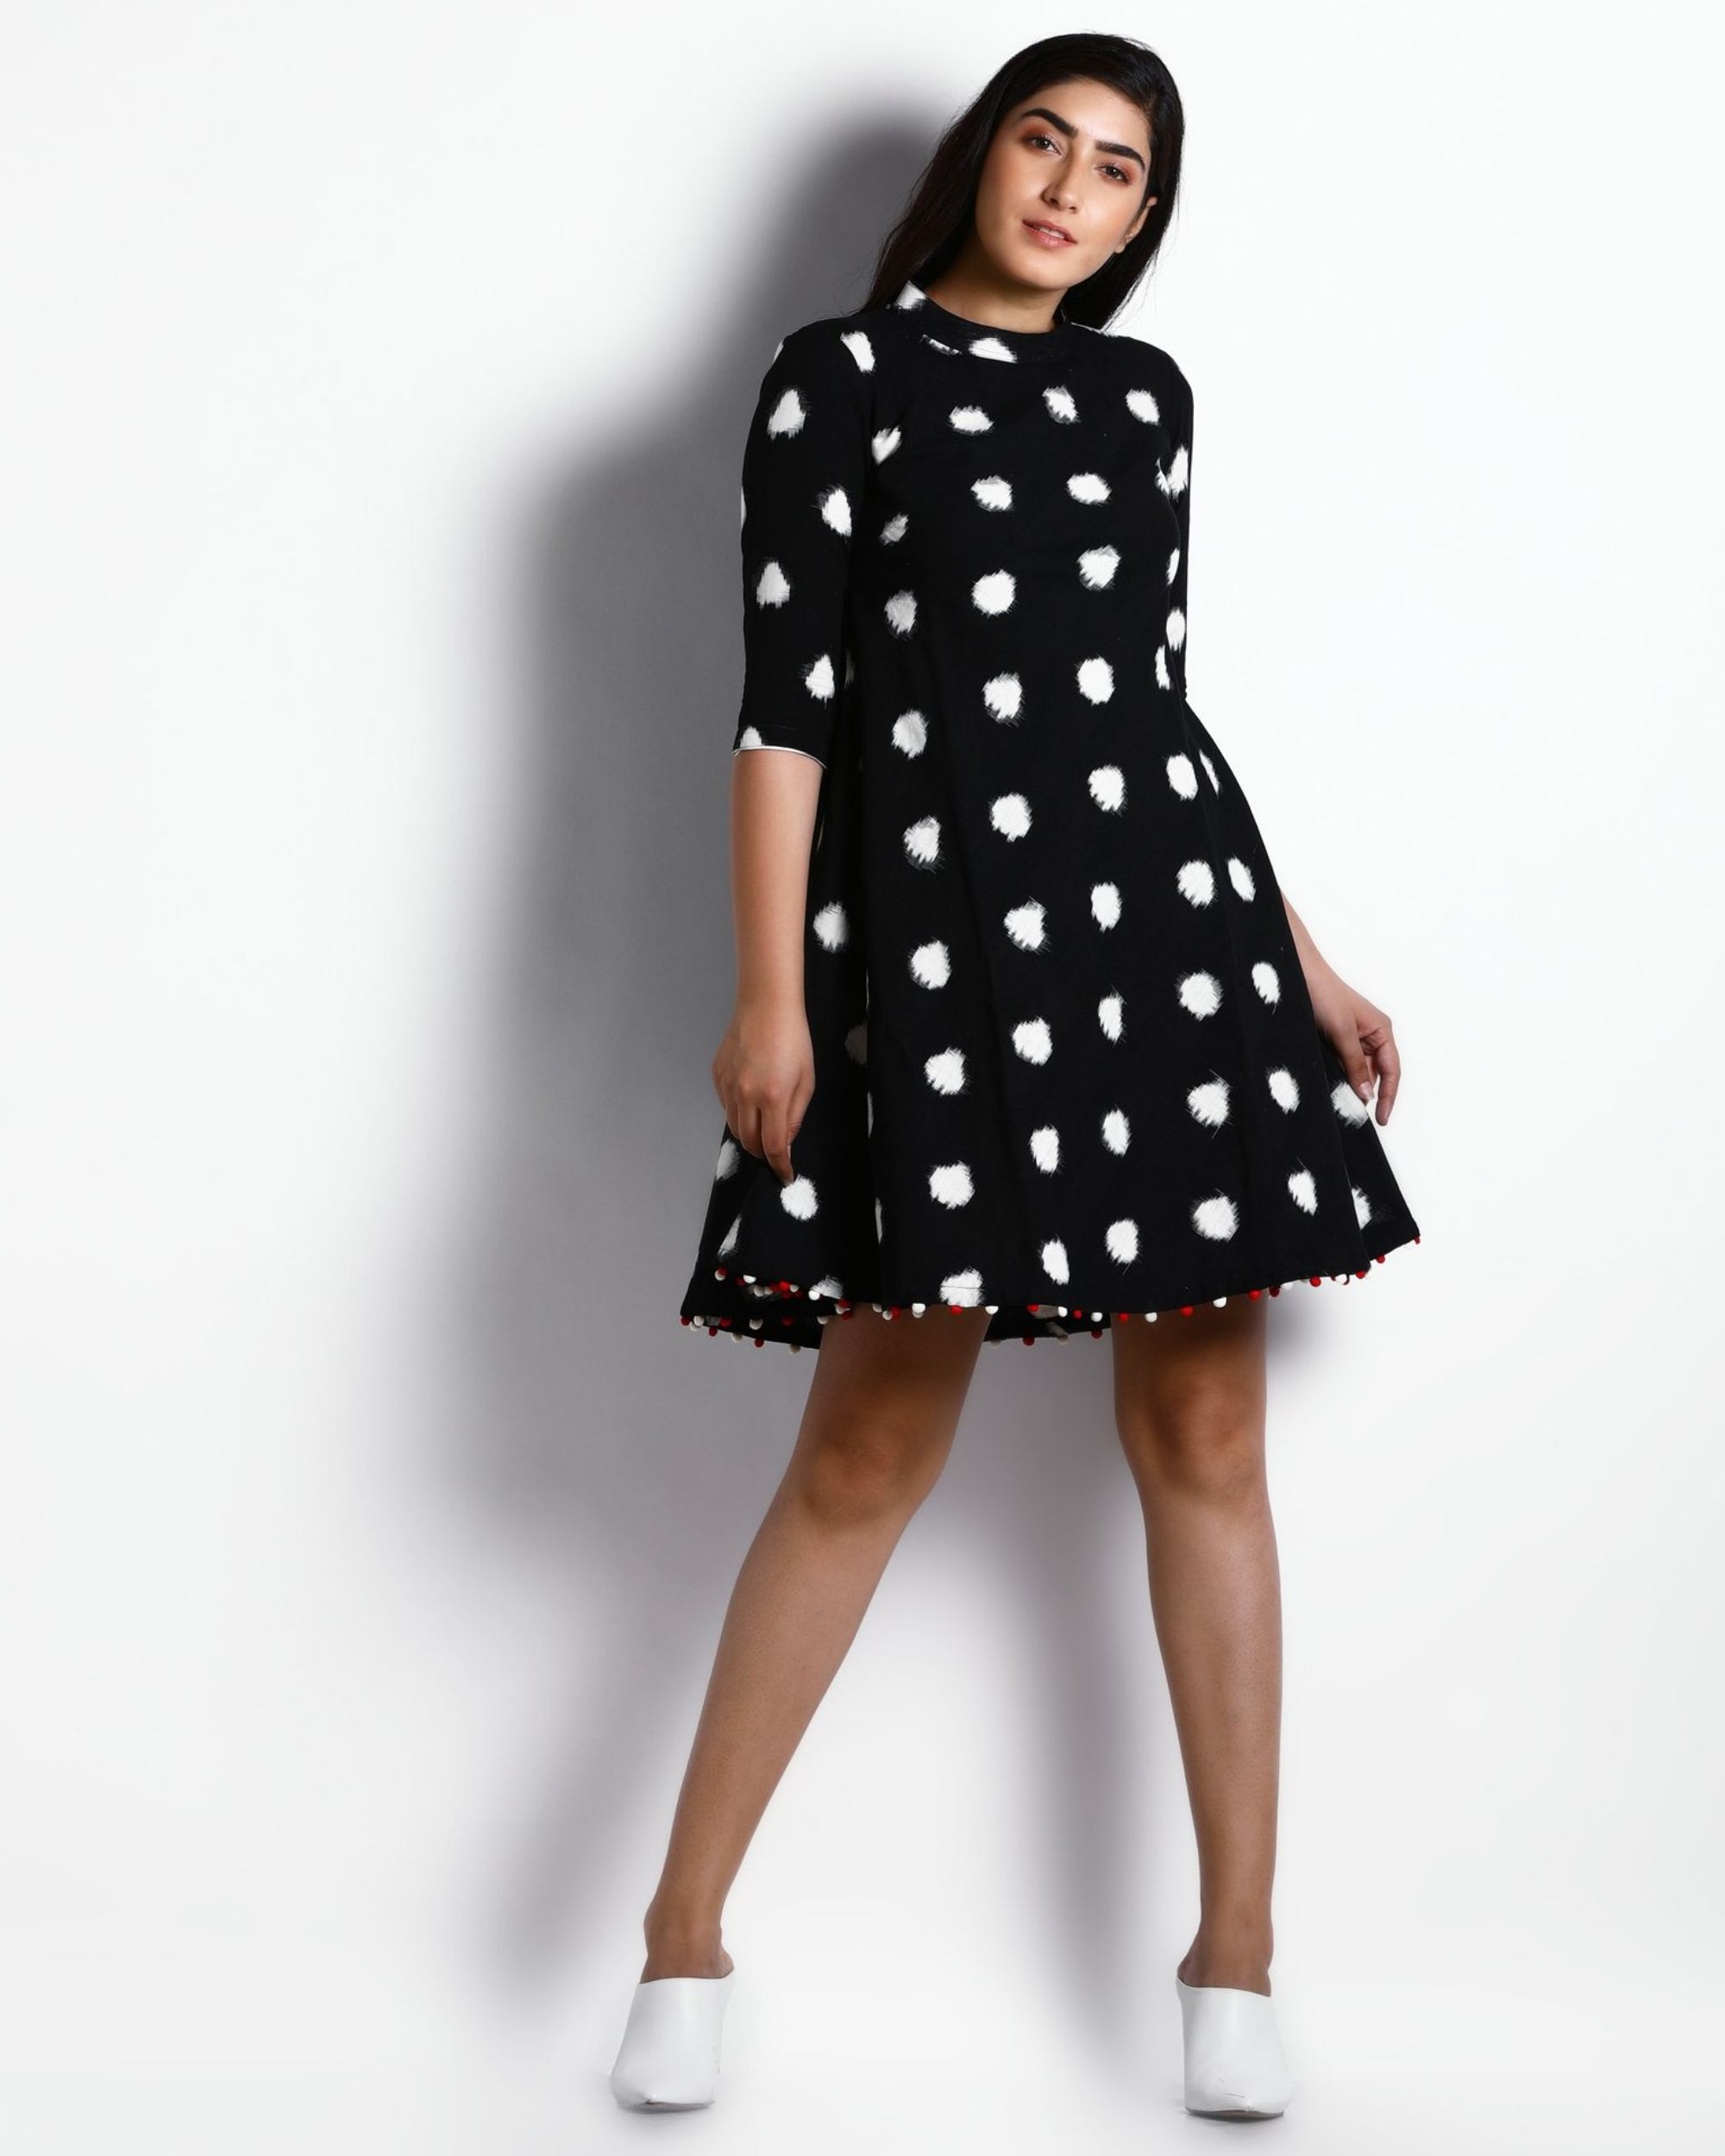 polka dot dress with pockets